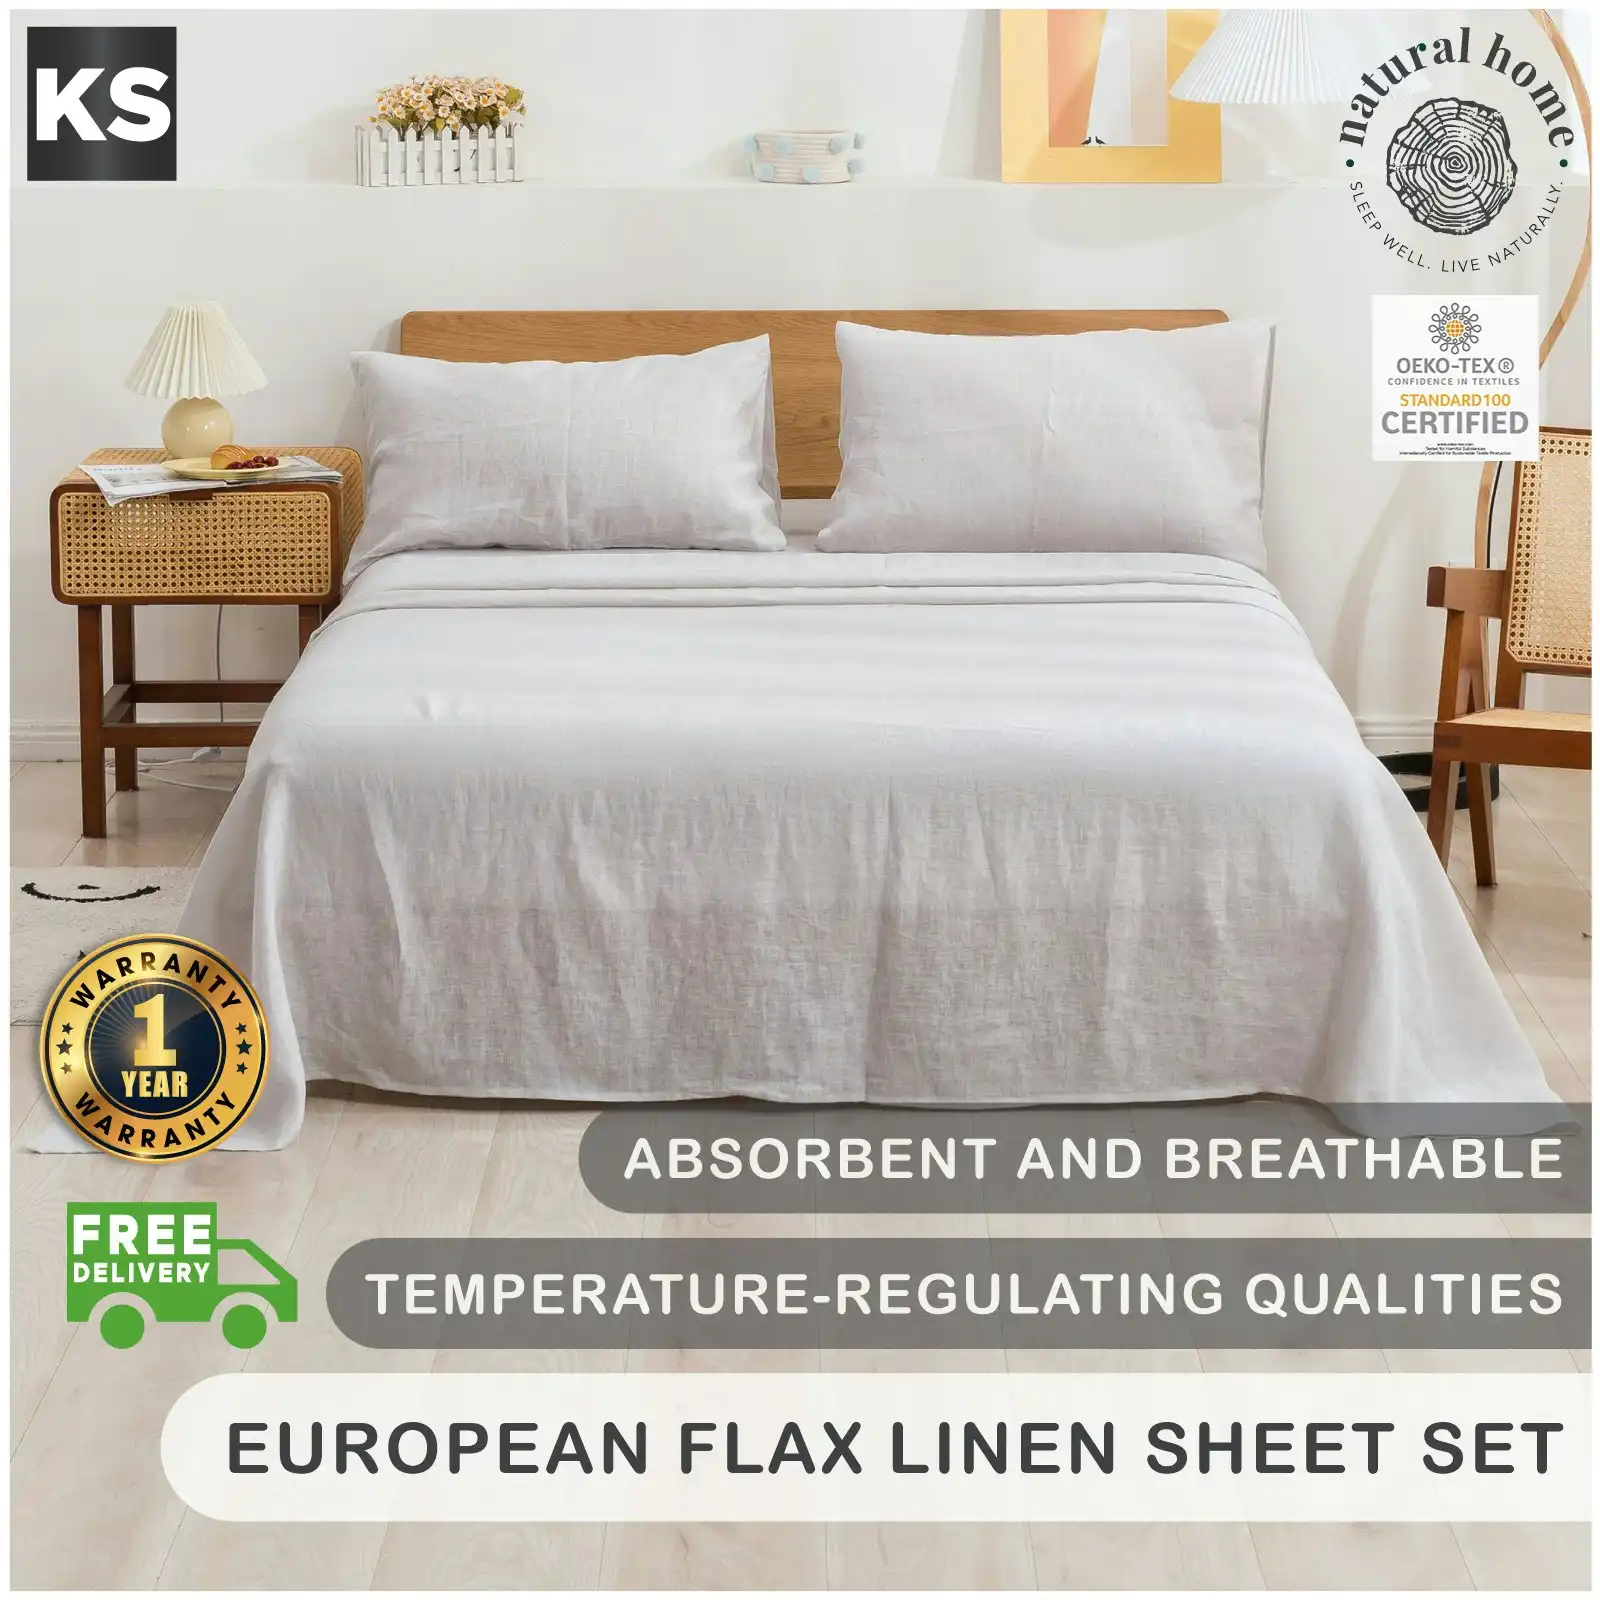 Natural Home 100% European Flax Linen Sheet Set Dove Grey King Single Bed